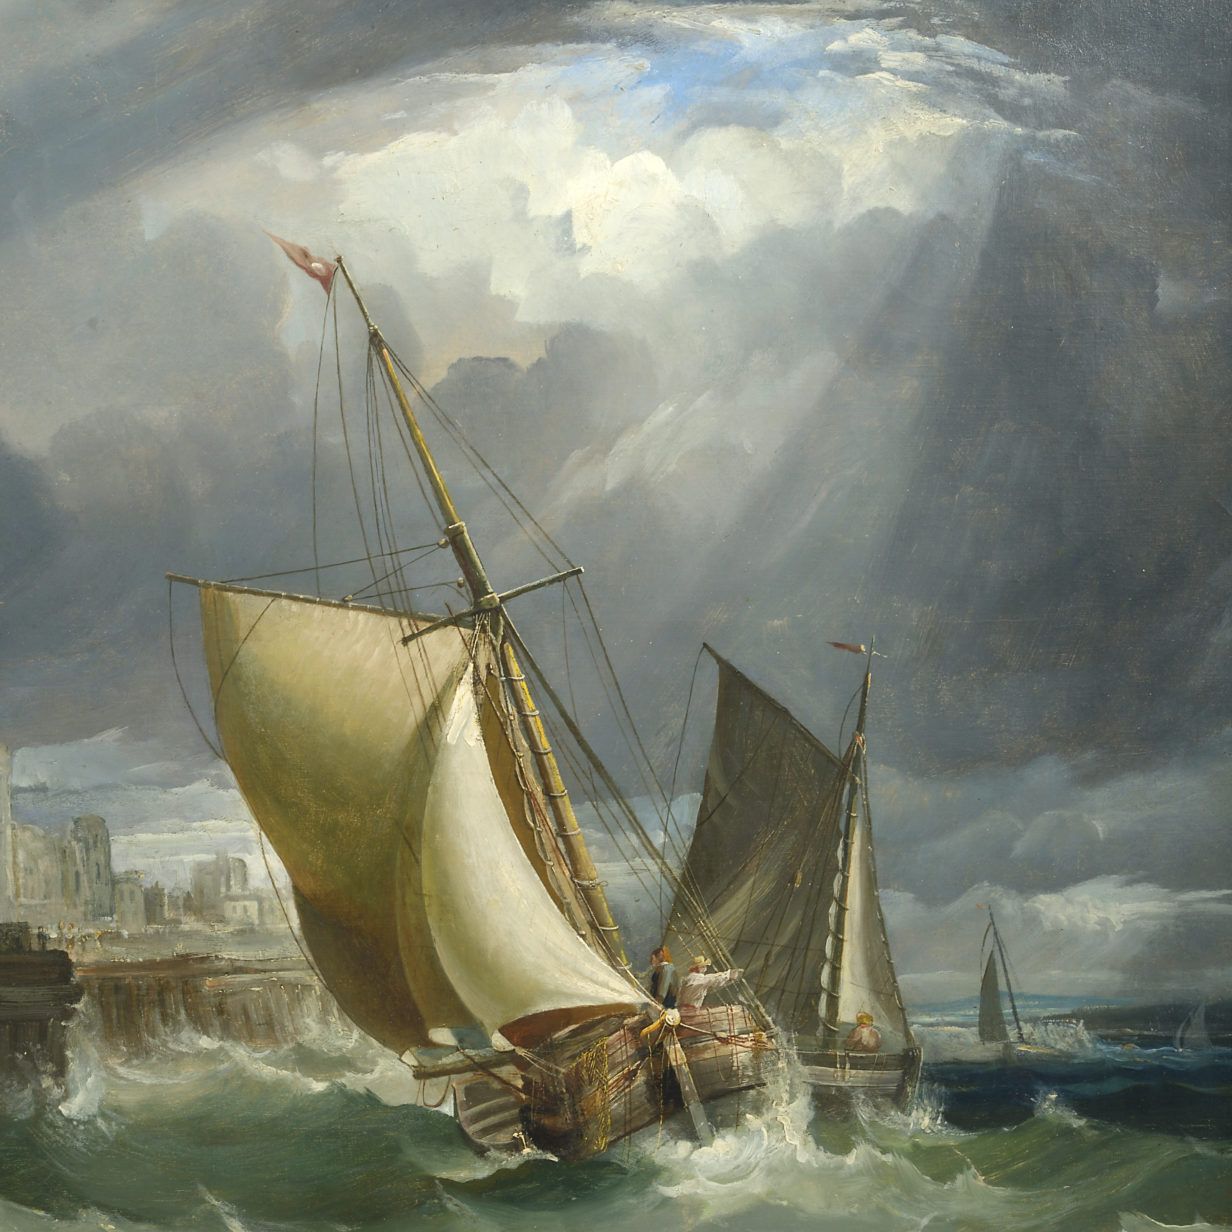 A 19th century coastal scene - a storm in a port